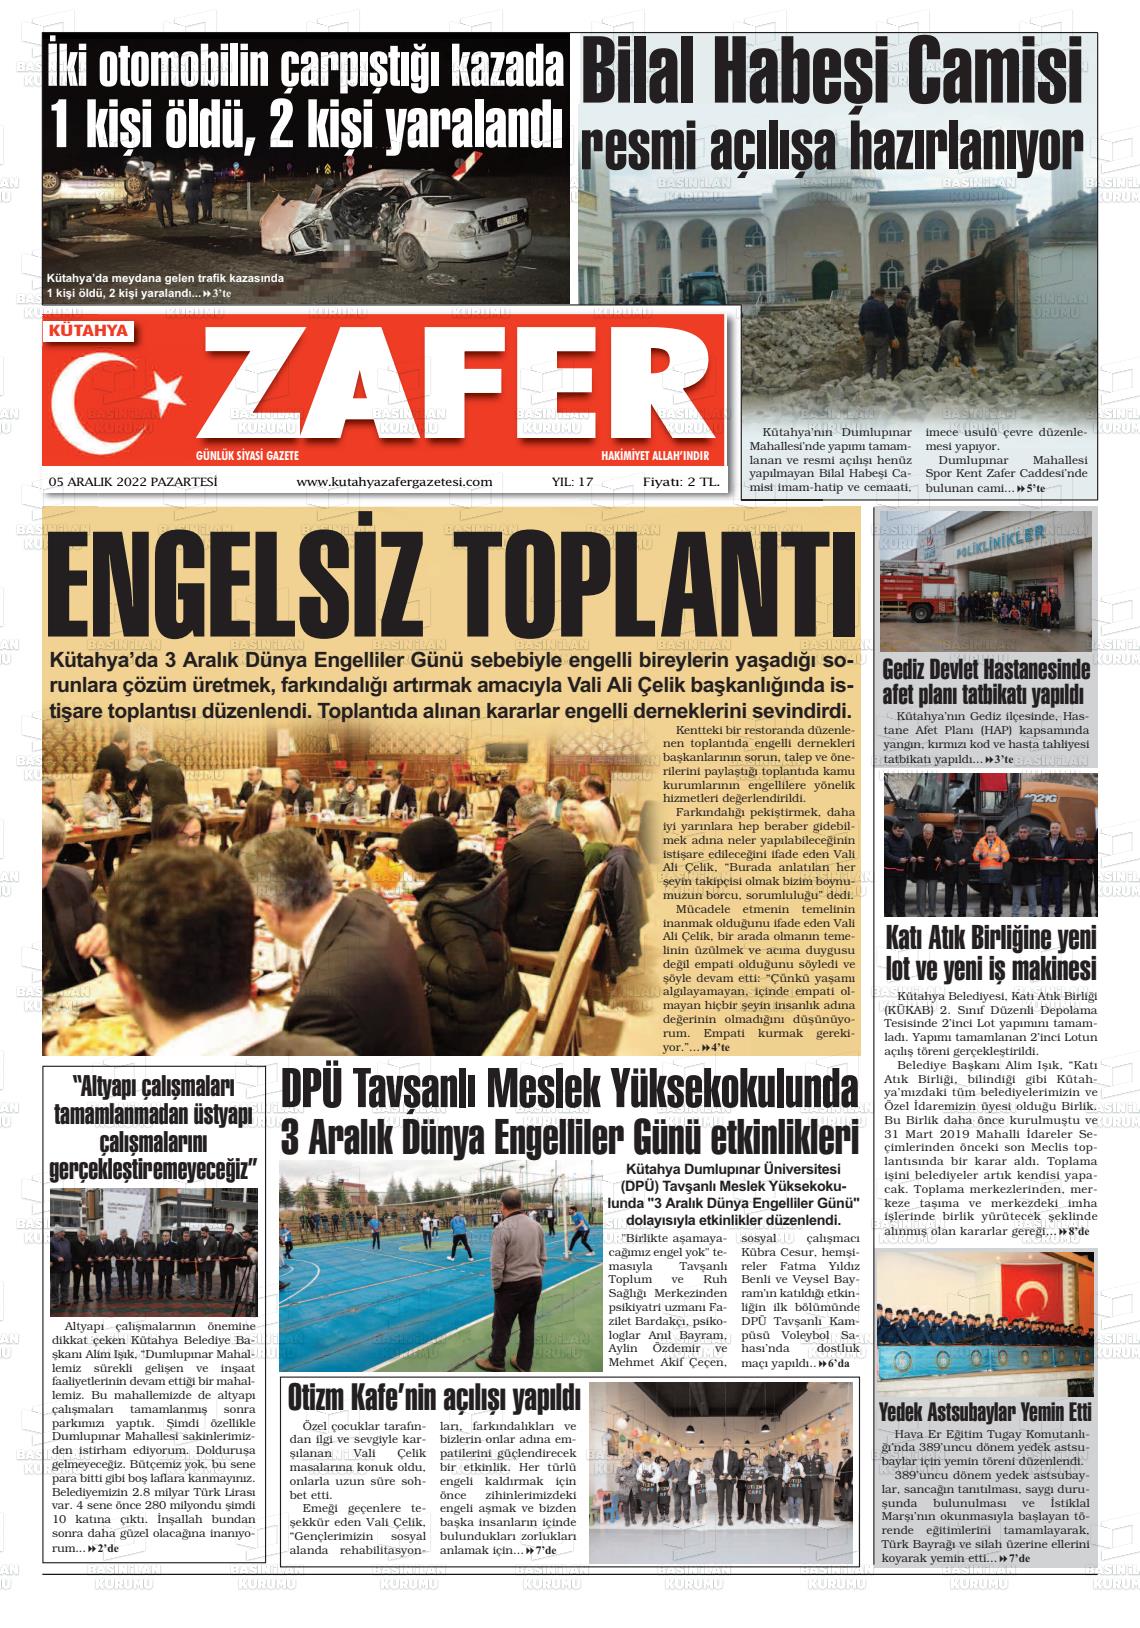 05 Aralık 2022 Kütahya Zafer Gazete Manşeti